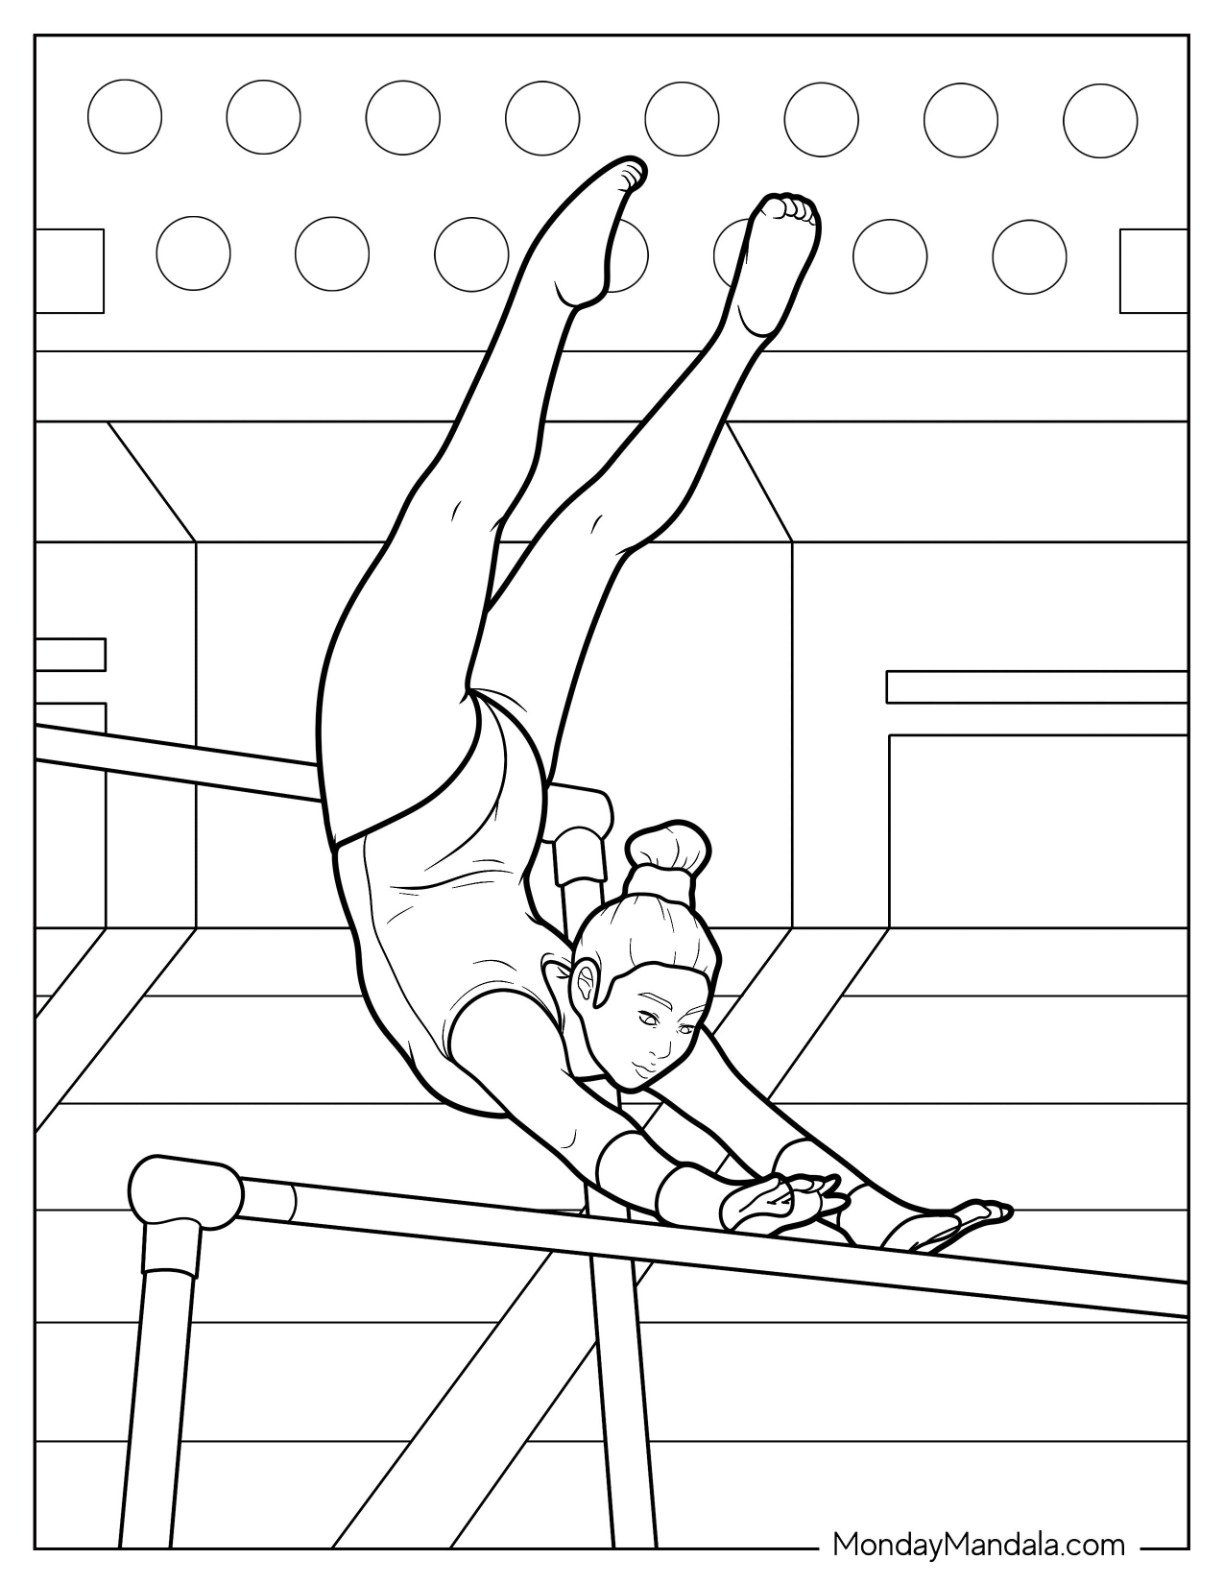 Gymnastics coloring pages free pdf printables